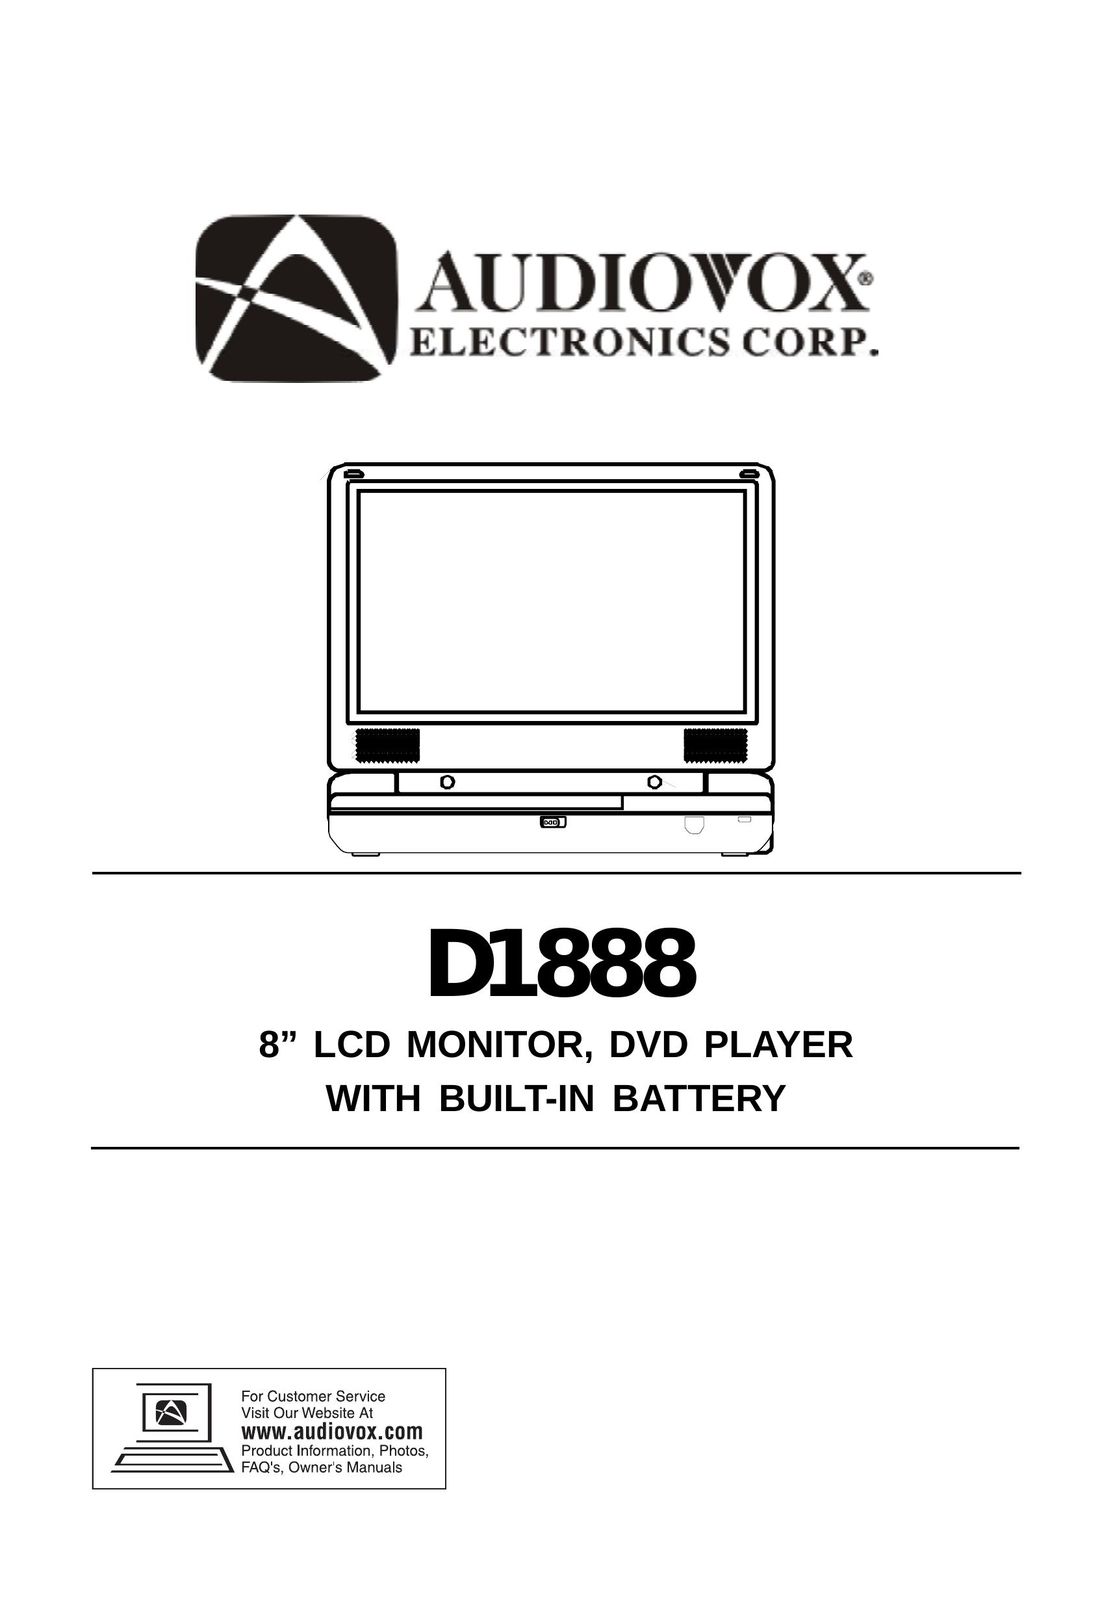 Audiovox D1888 DVD Player User Manual